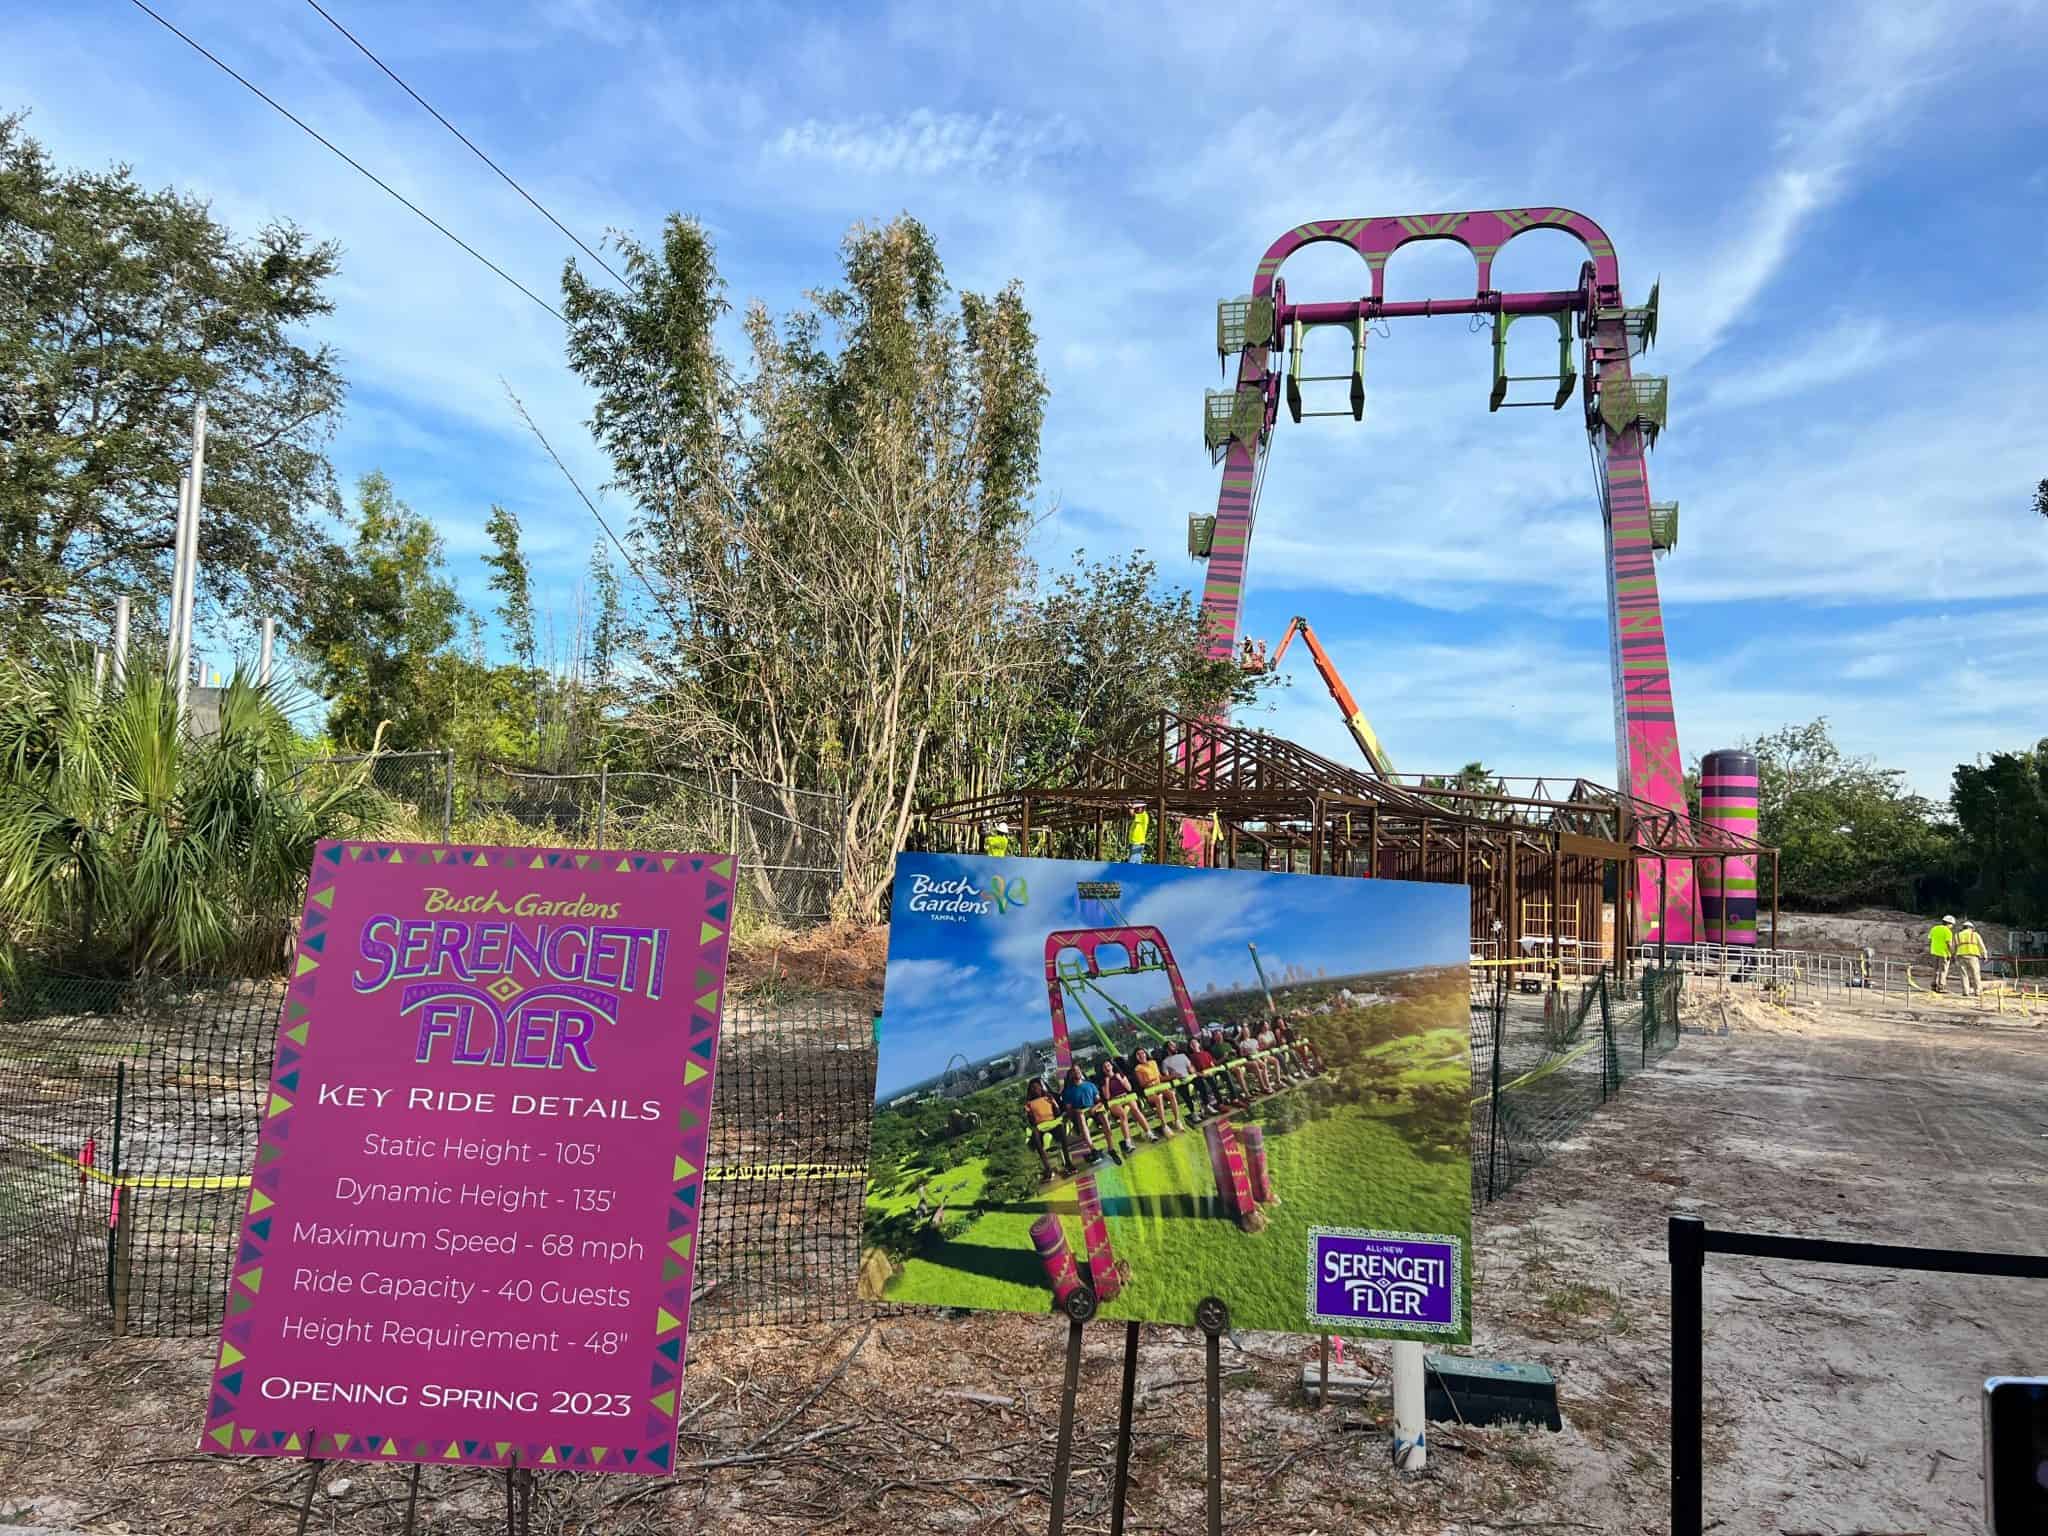 Busch Gardens Tampa Bay Serengeti Flyer Revealed Laptrinhx News